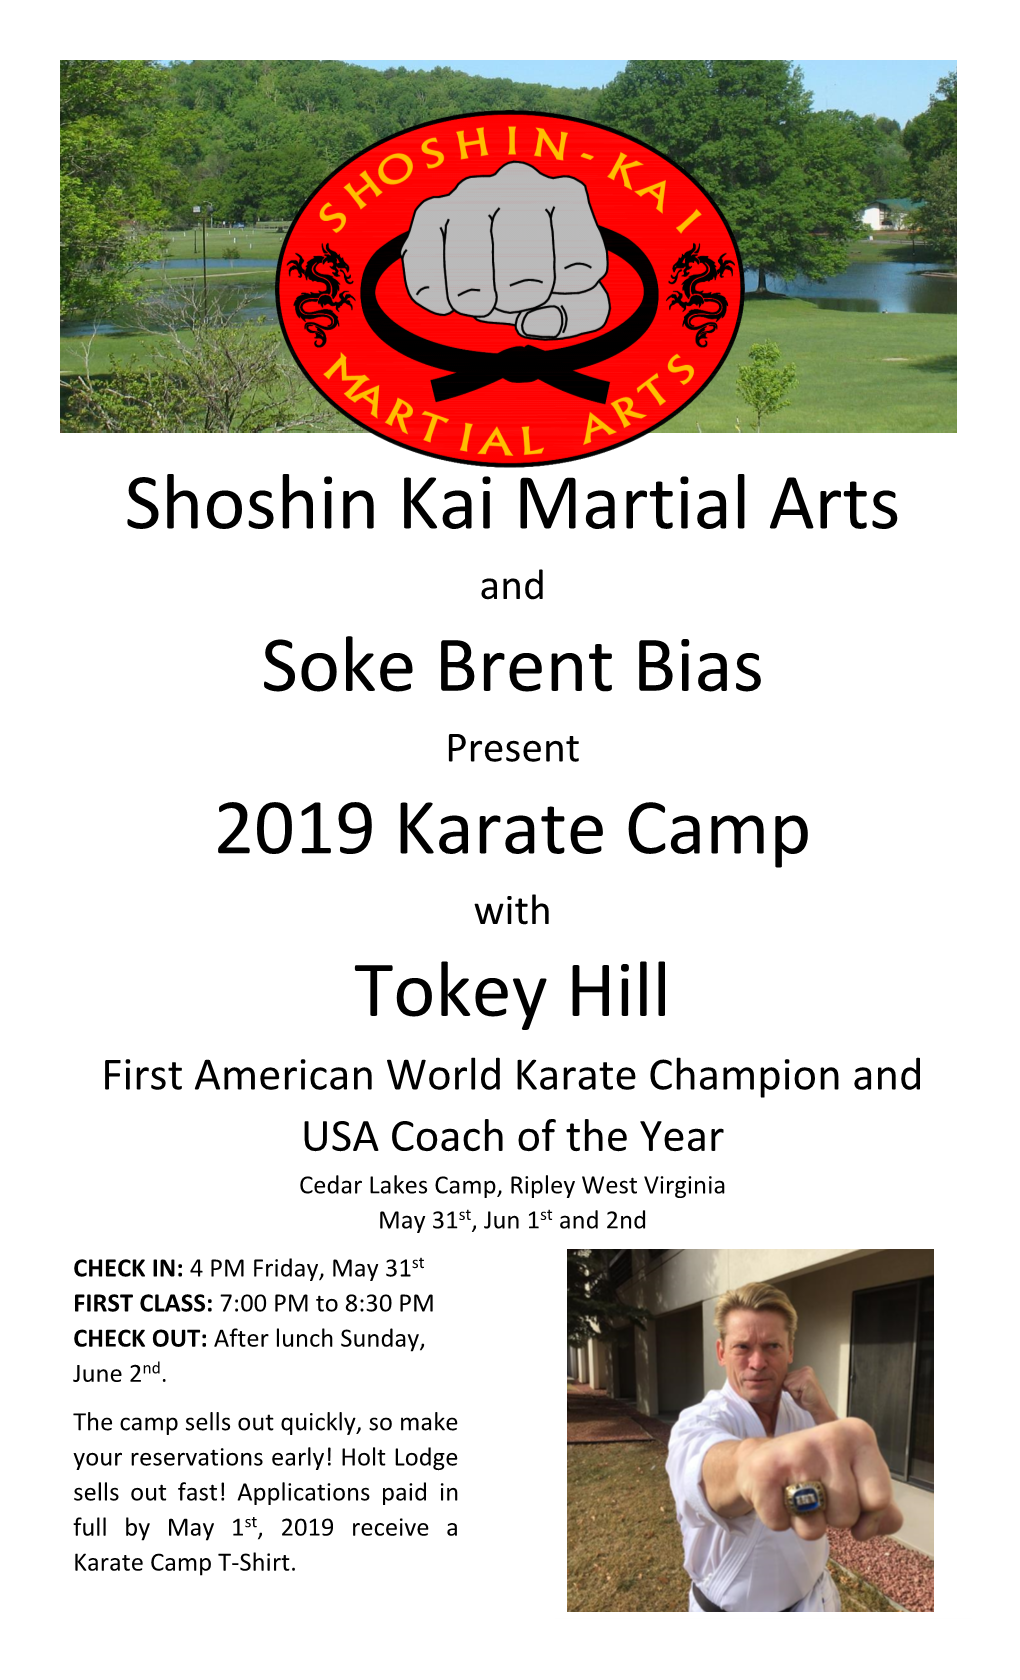 Shoshin Kai Martial Arts Soke Brent Bias 2019 Karate Camp Tokey Hill